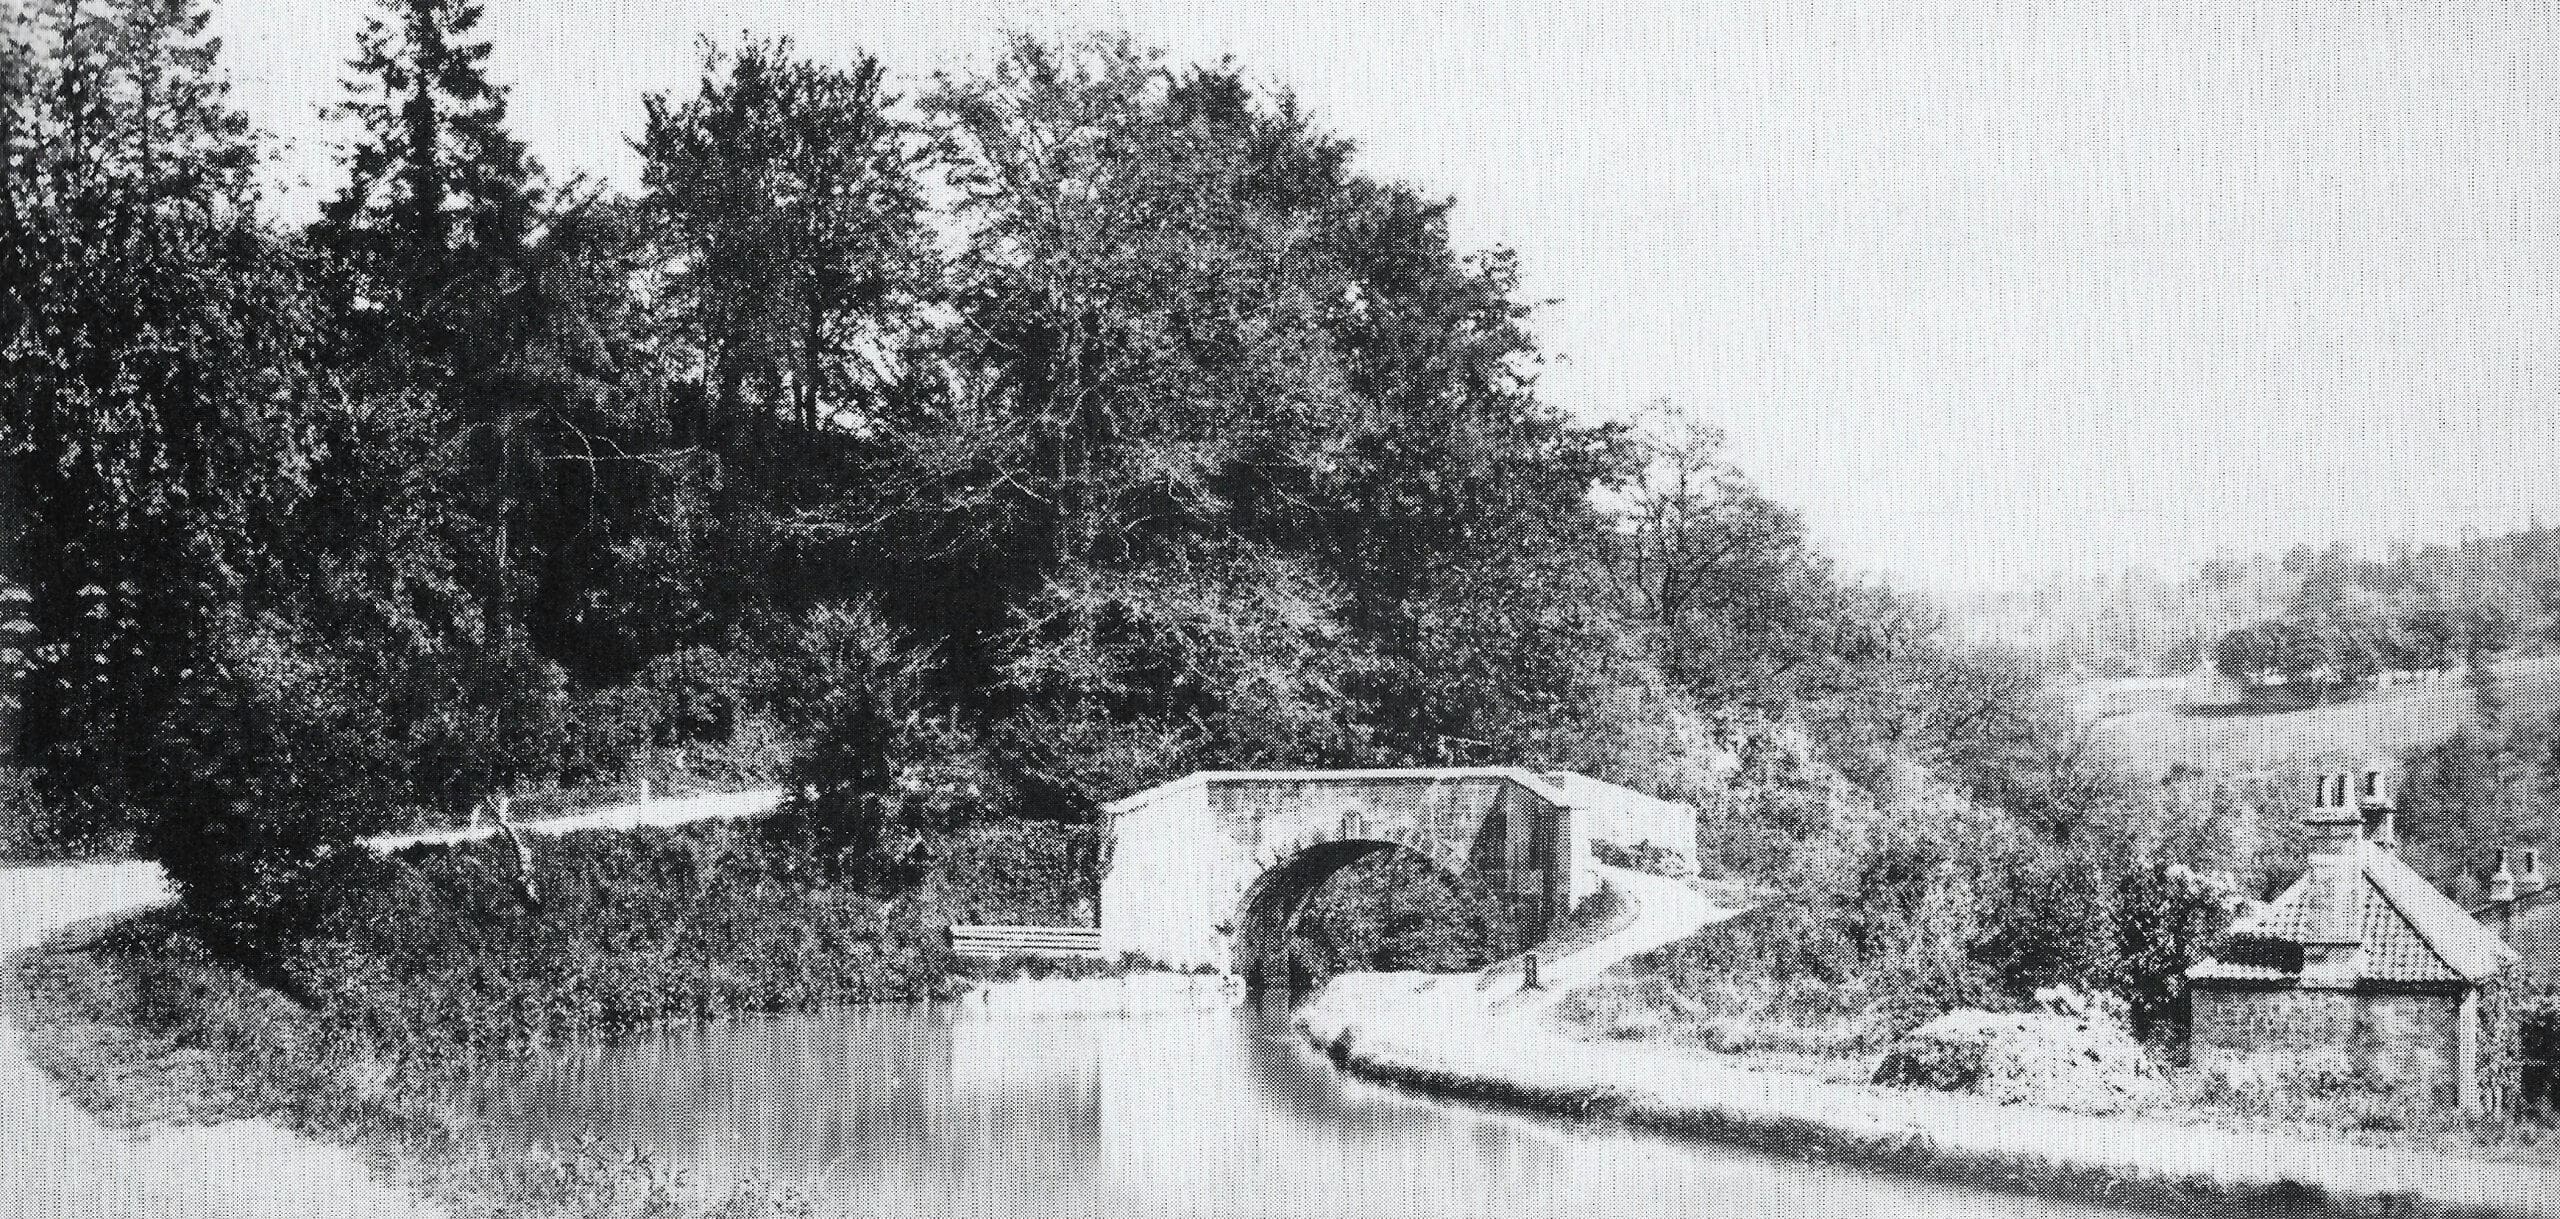 tucking-mill-bridge-about-1880